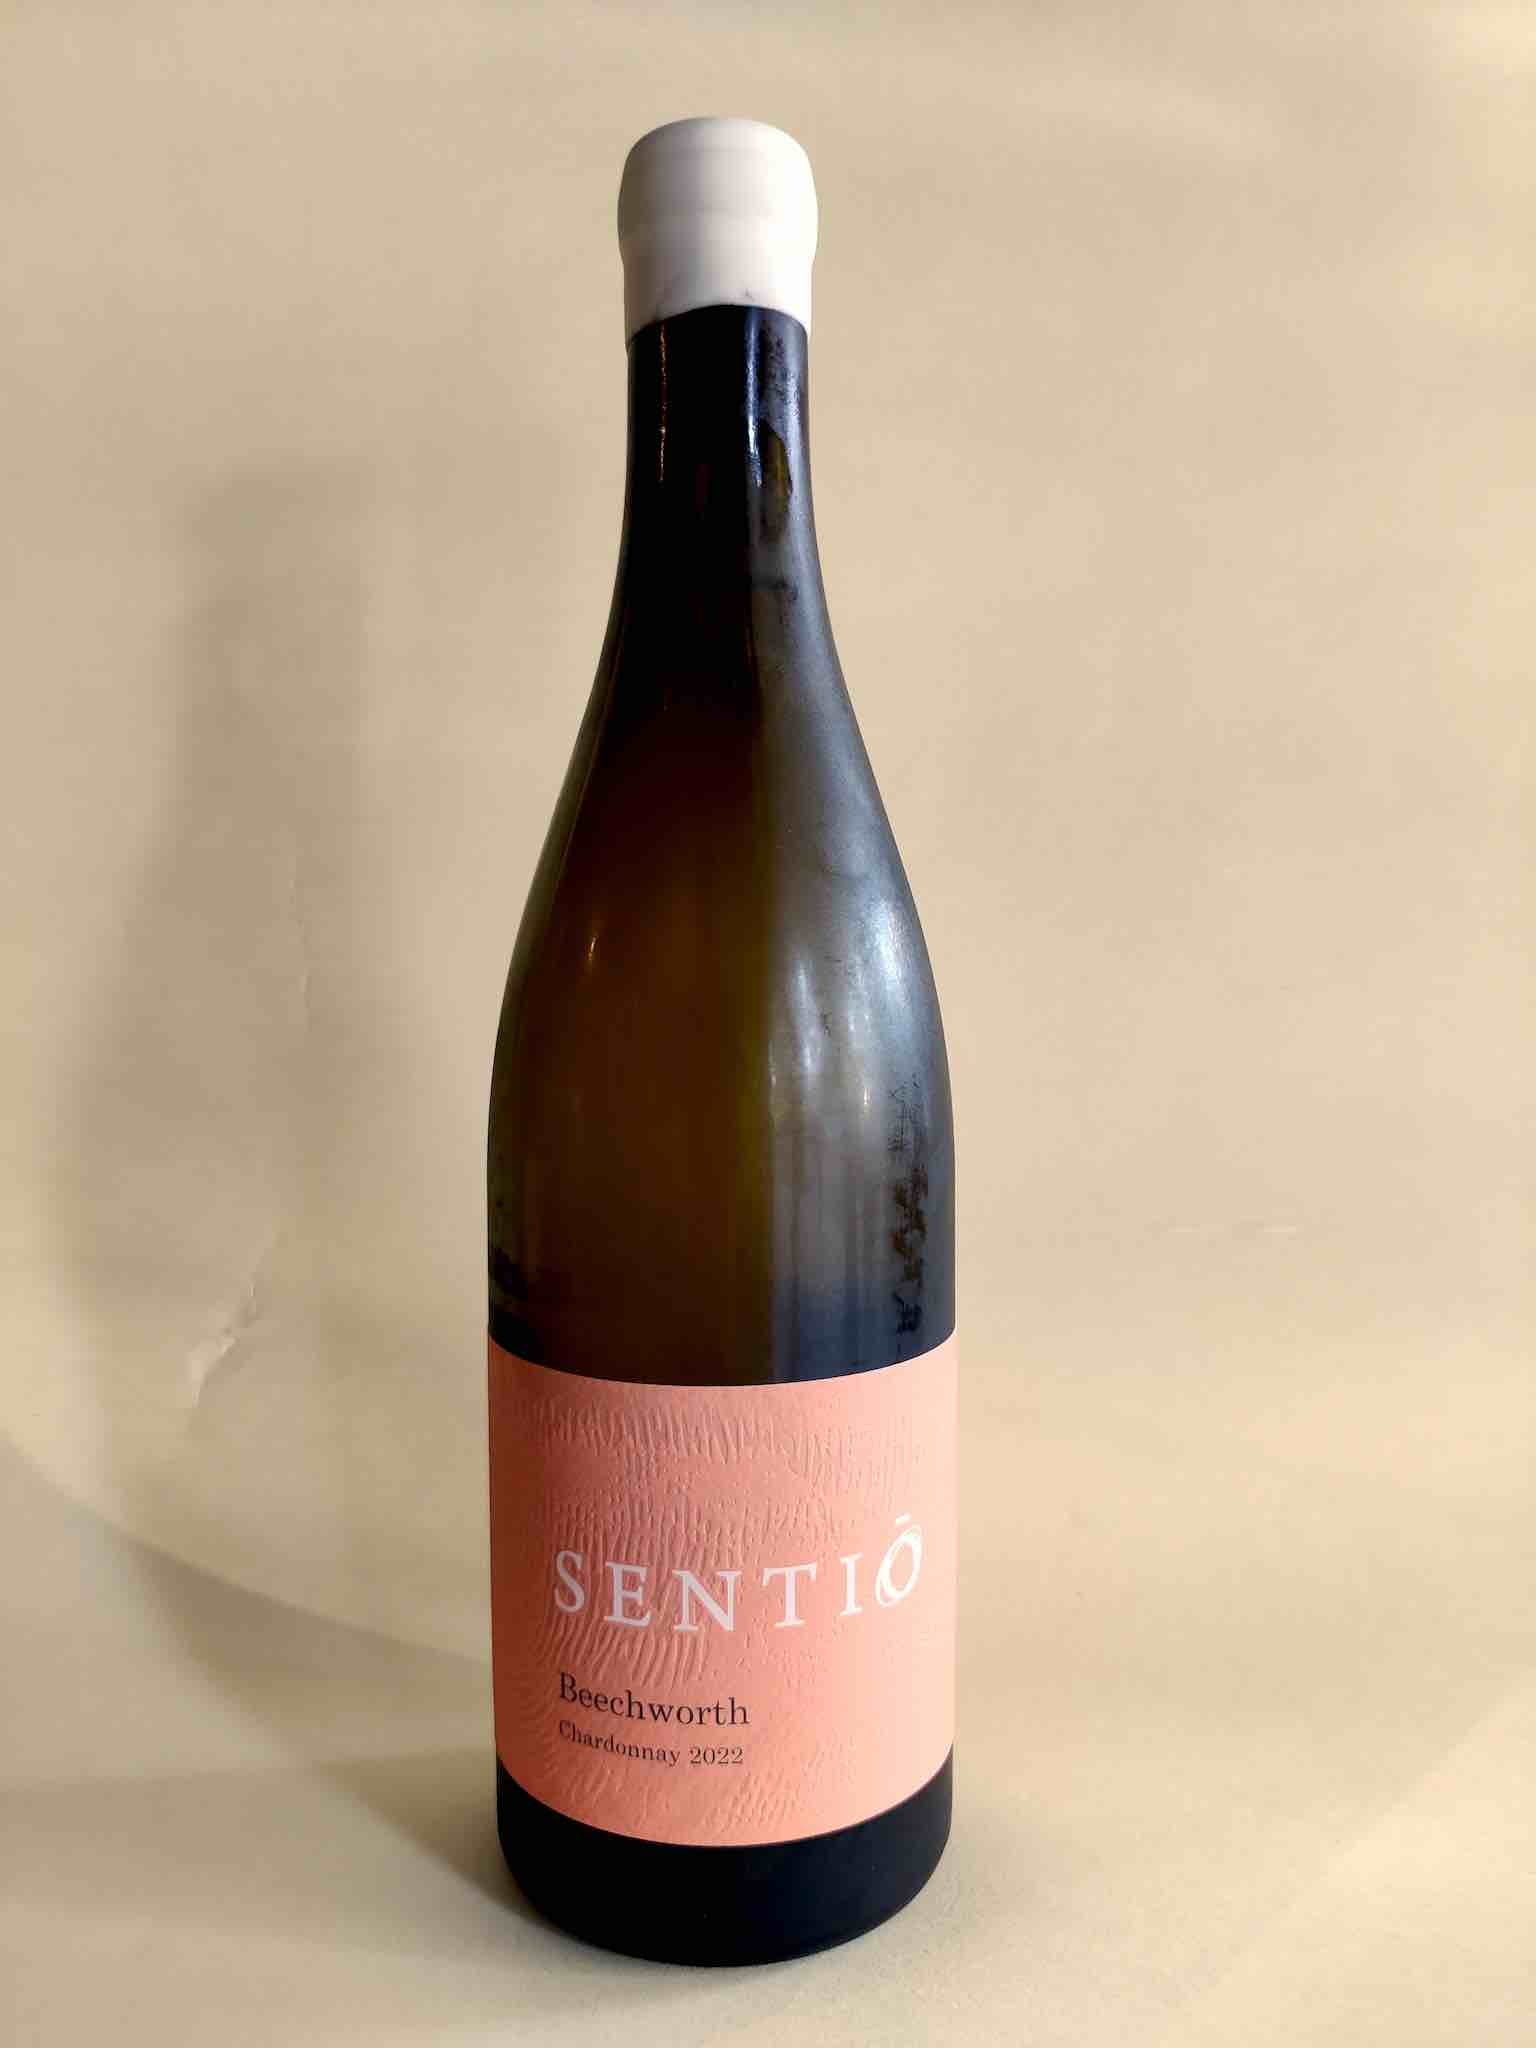 A bottle of 2022 Sentio Chardonnay from Beechworth Victoria